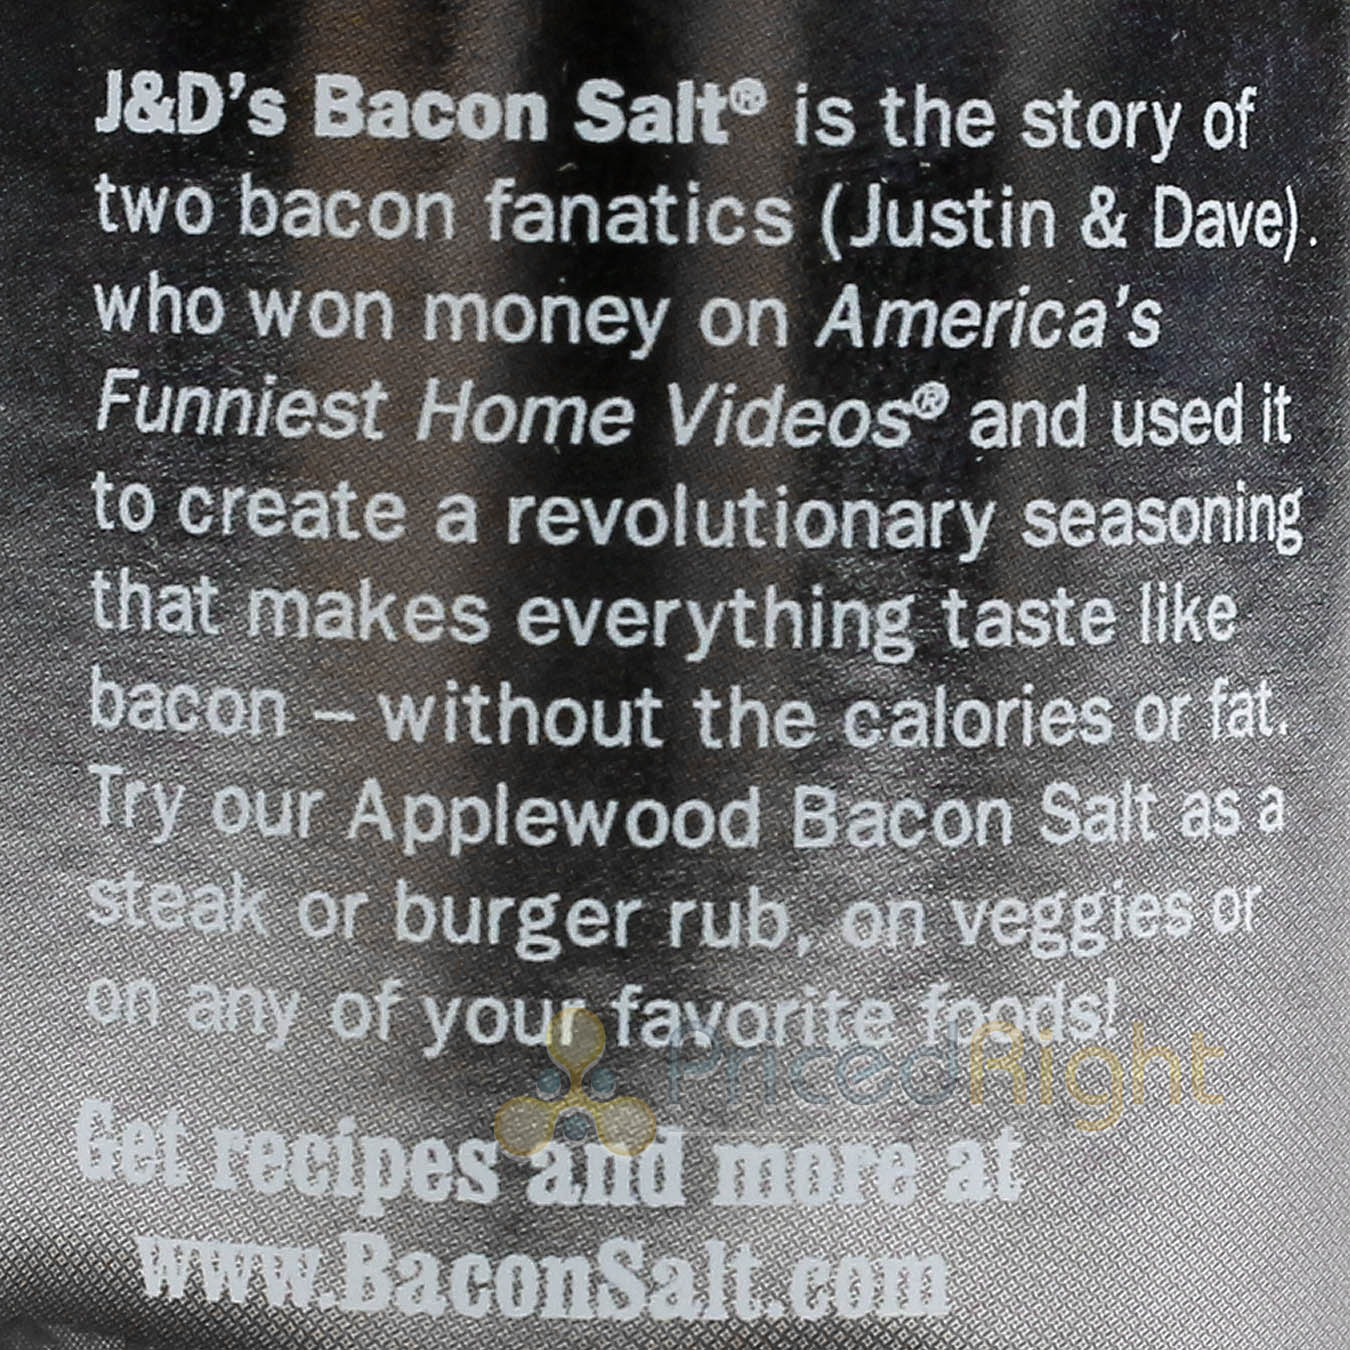 J&D's Applewood & Jalapeno Bacon Salt 2.5oz All Natural Bacon Flavored Seasoning